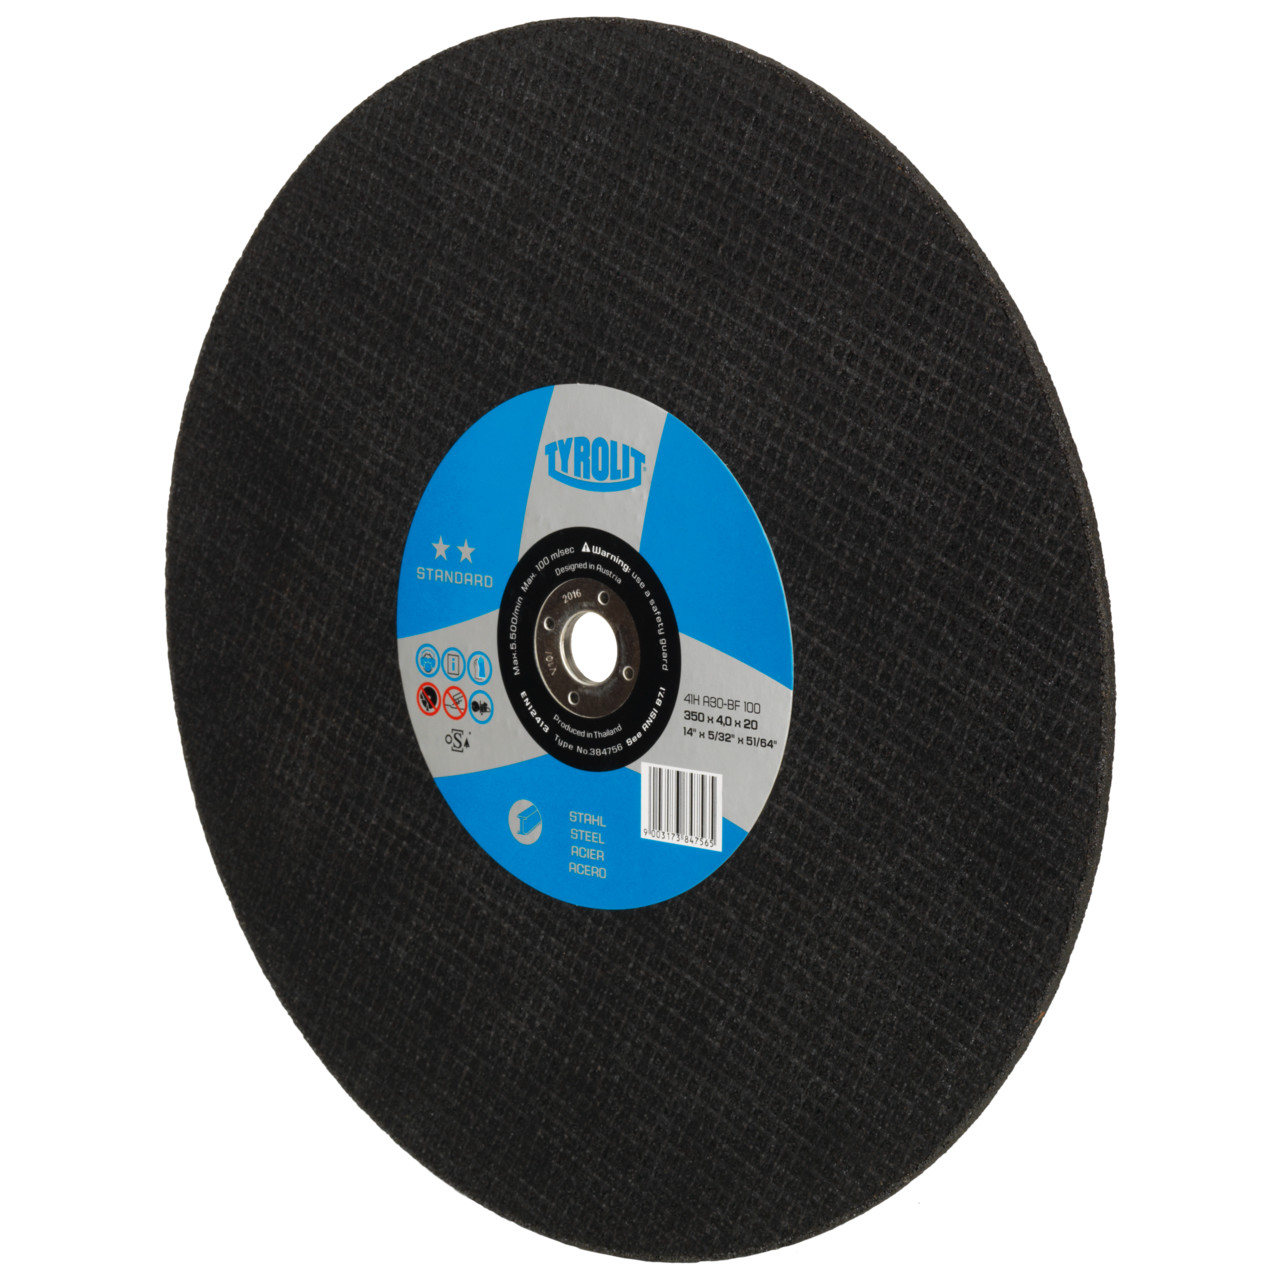 Tyrolit Cutting discs DxDxH 300x3.5x25.4 For steel, shape: 41 - straight version, Art. 384755